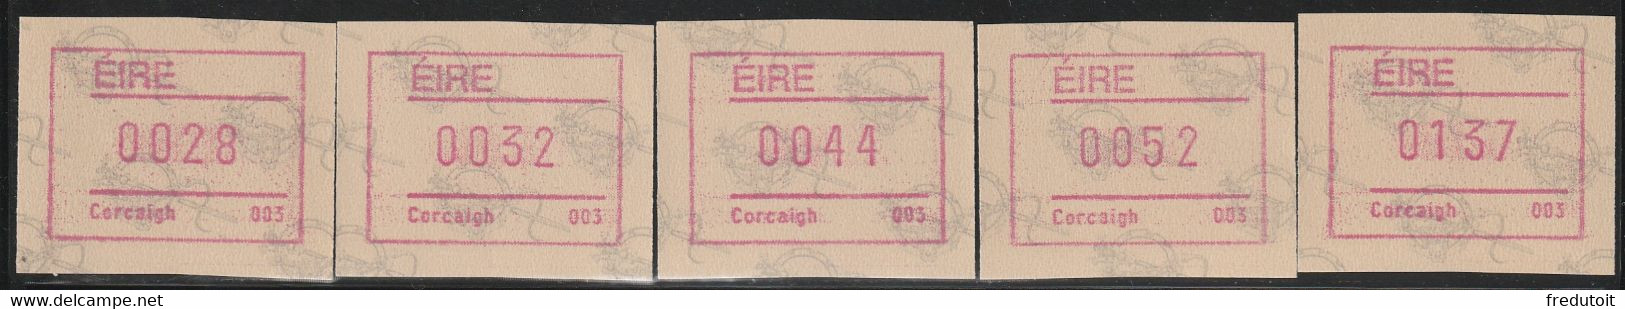 IRLANDE - Timbres Distributeurs / FRAMA  ATM - N°4** (1992) Corcaigh 003 - Vignettes D'affranchissement (Frama)